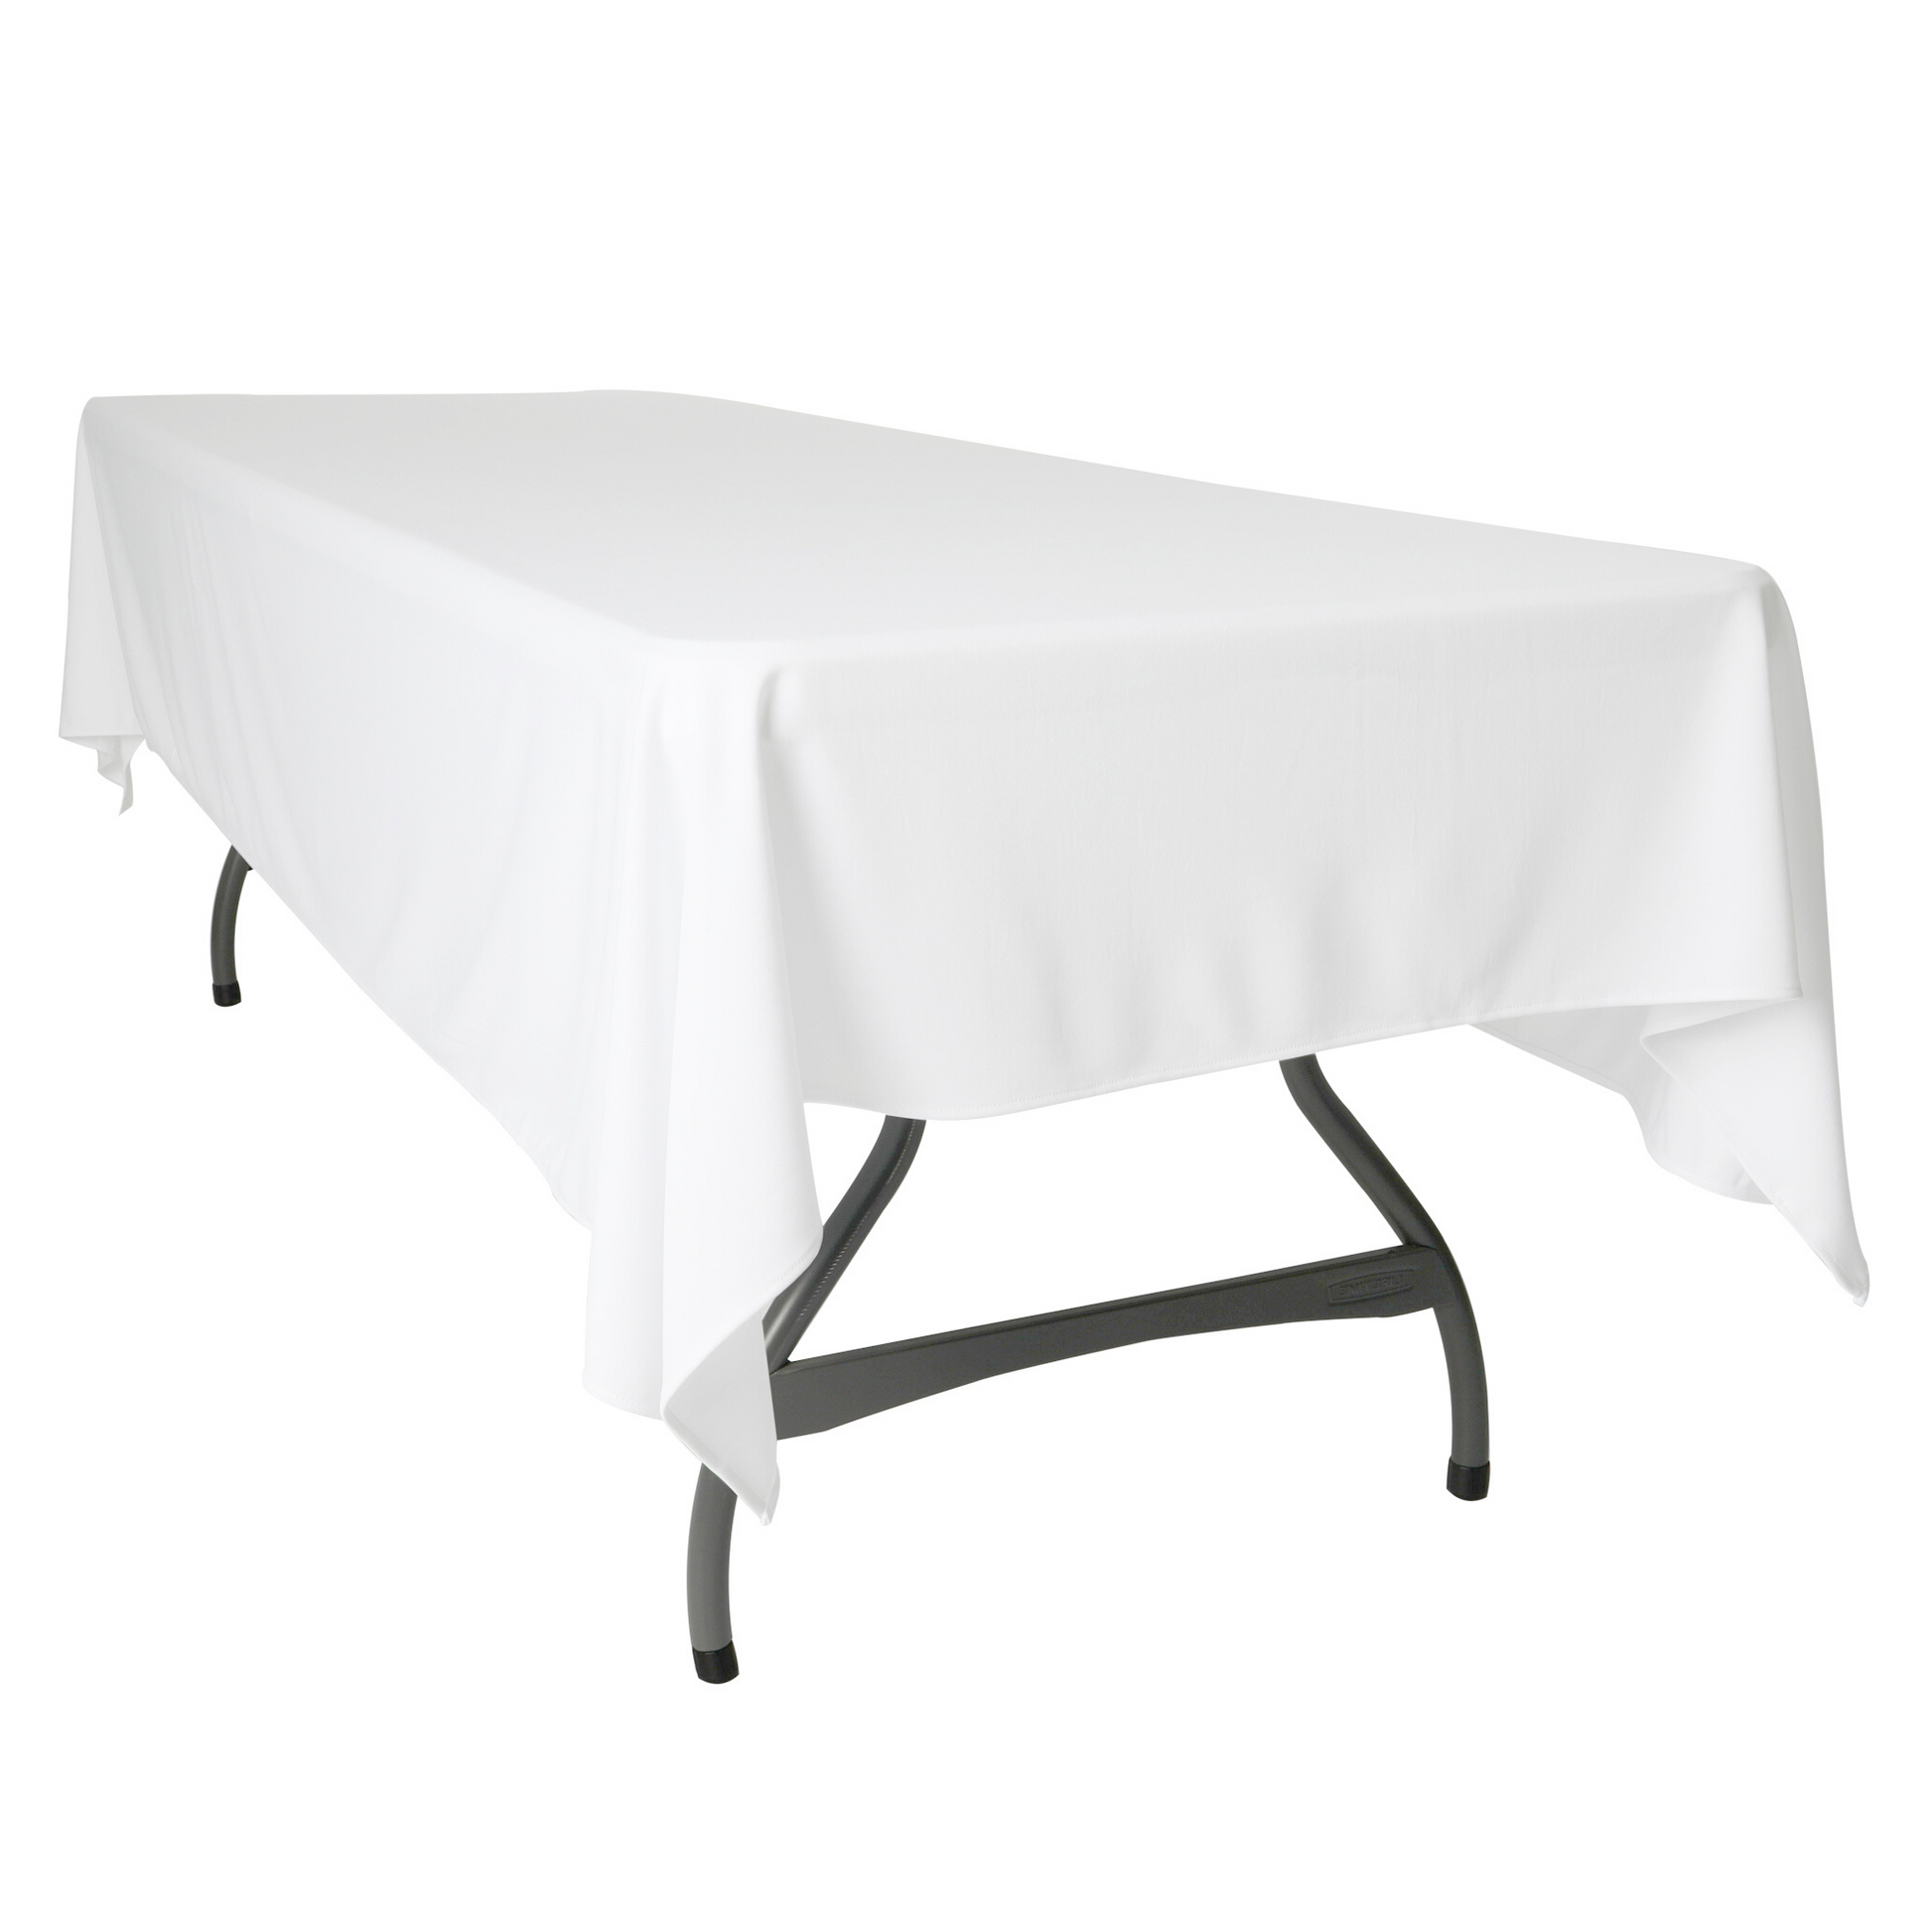 Scuba 60"x120" Rectangular Tablecloth - White